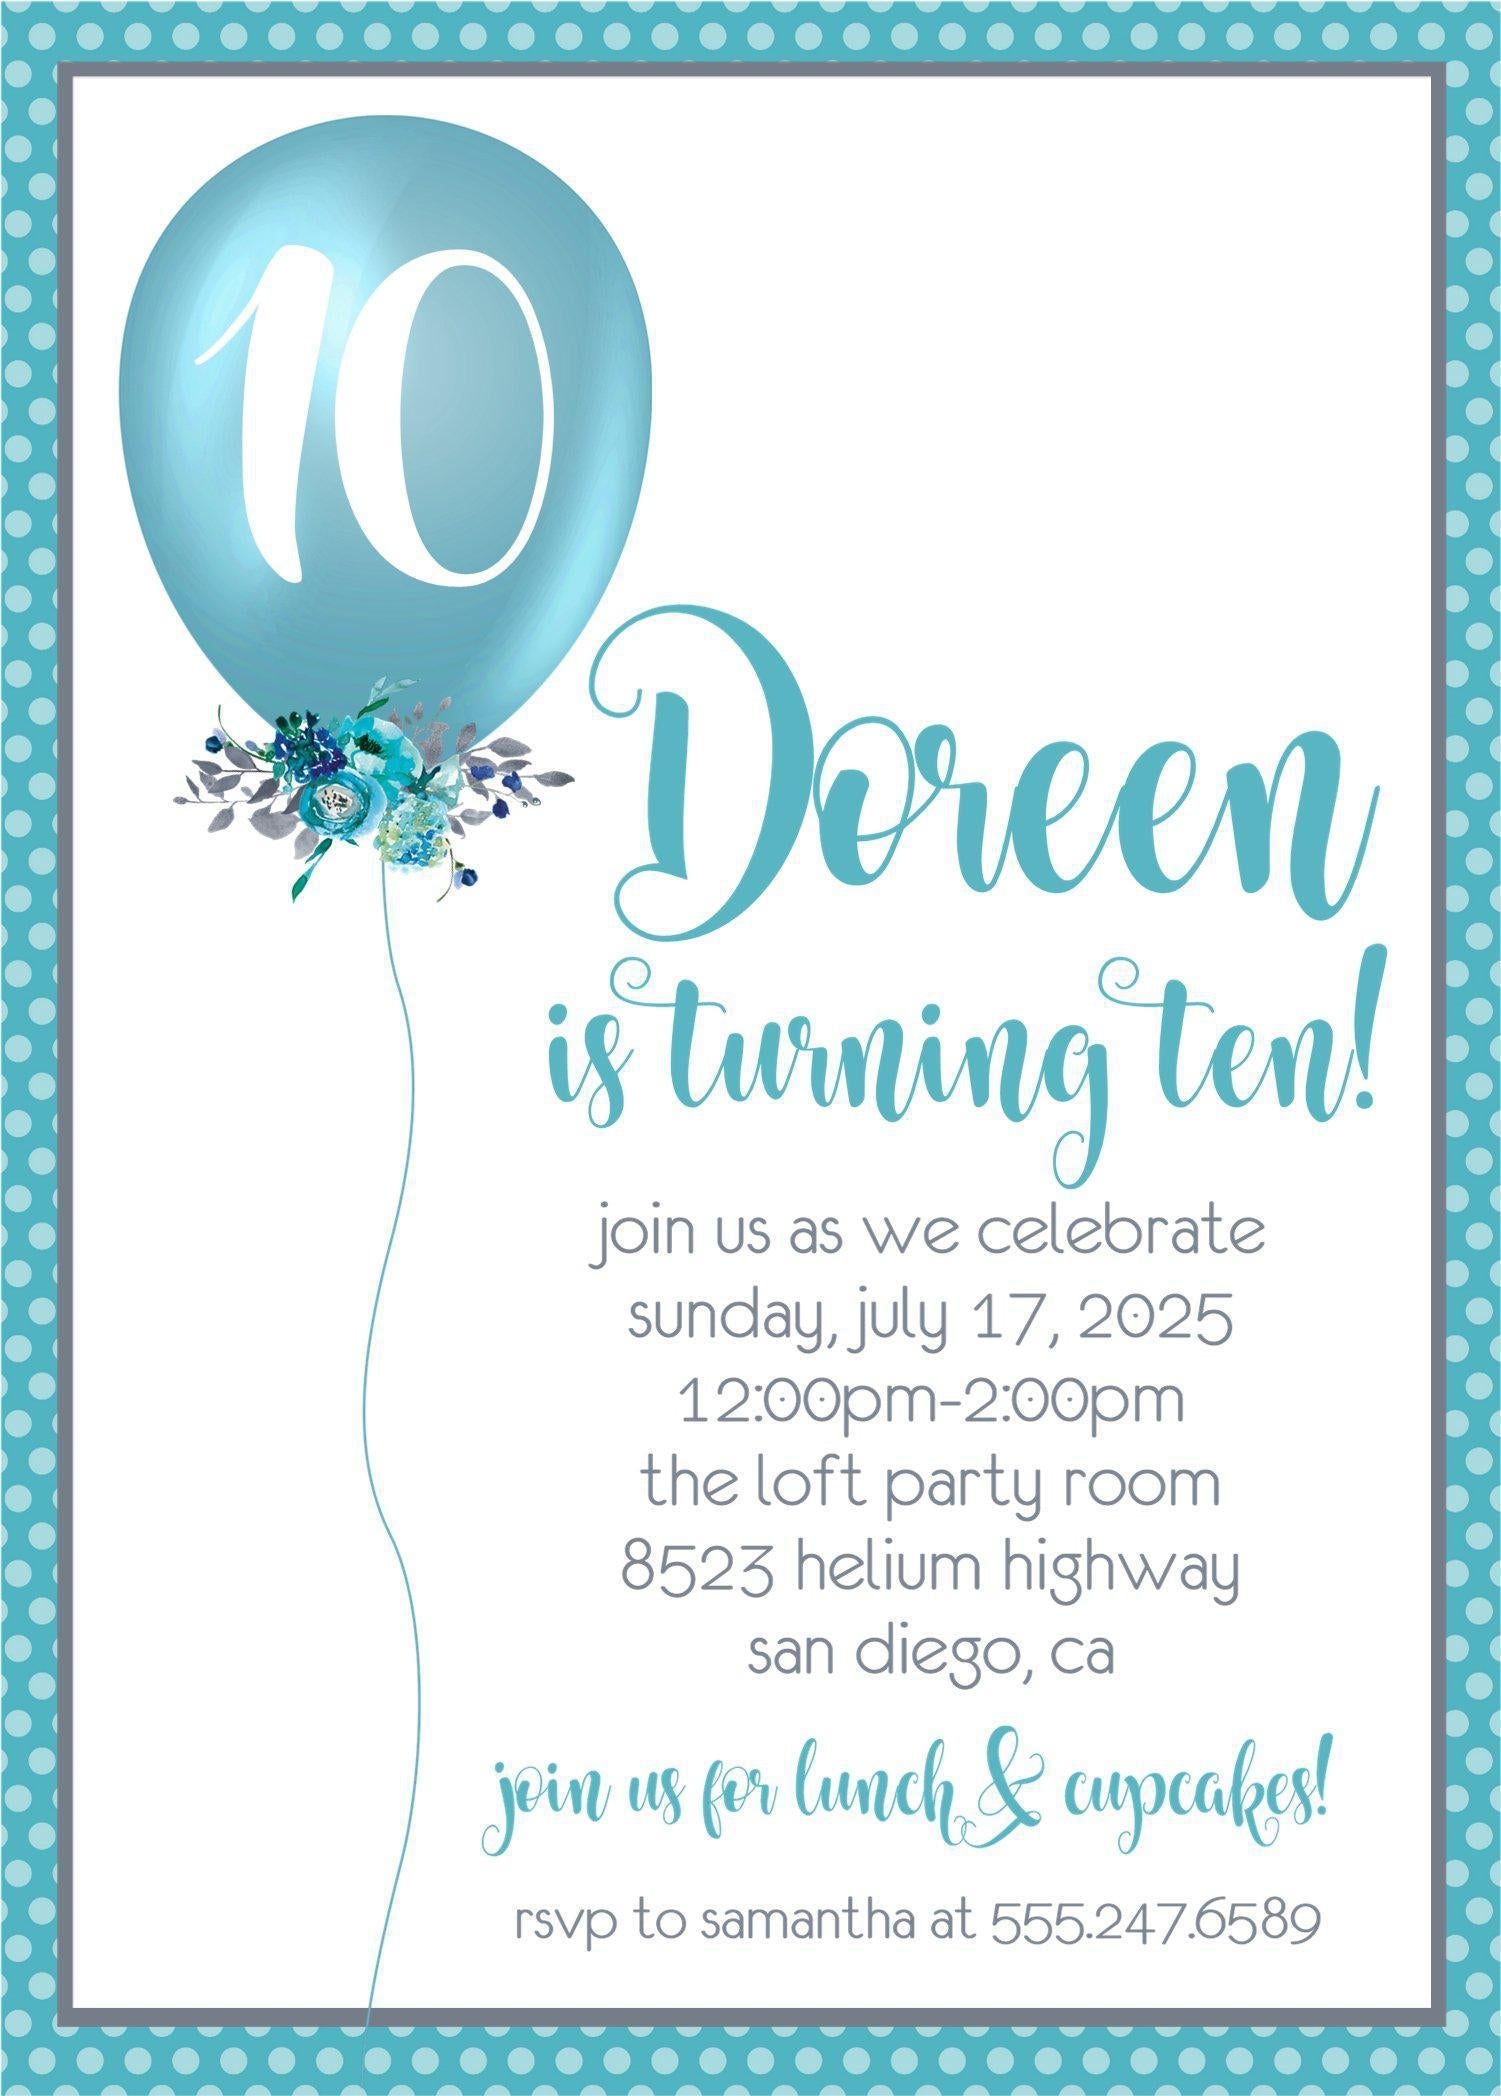 Turquoise Balloon Birthday Party Invitations